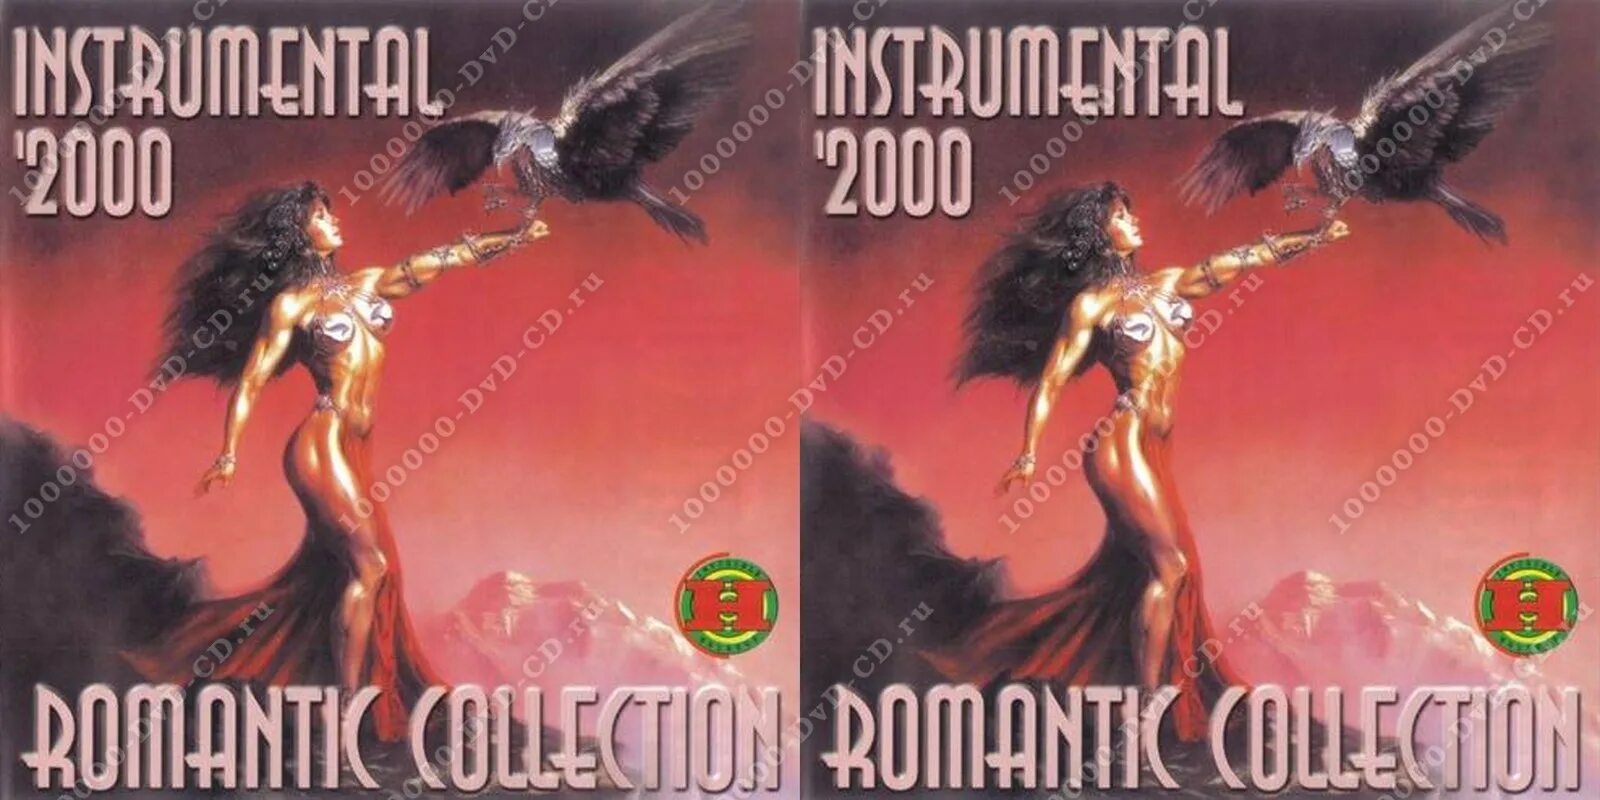 Музыка романтик коллекшн. Диск романтик коллекшн 2000. Компакт диск романтик коллекшен. Диски романтик коллекшн. Romantic collection обложки.